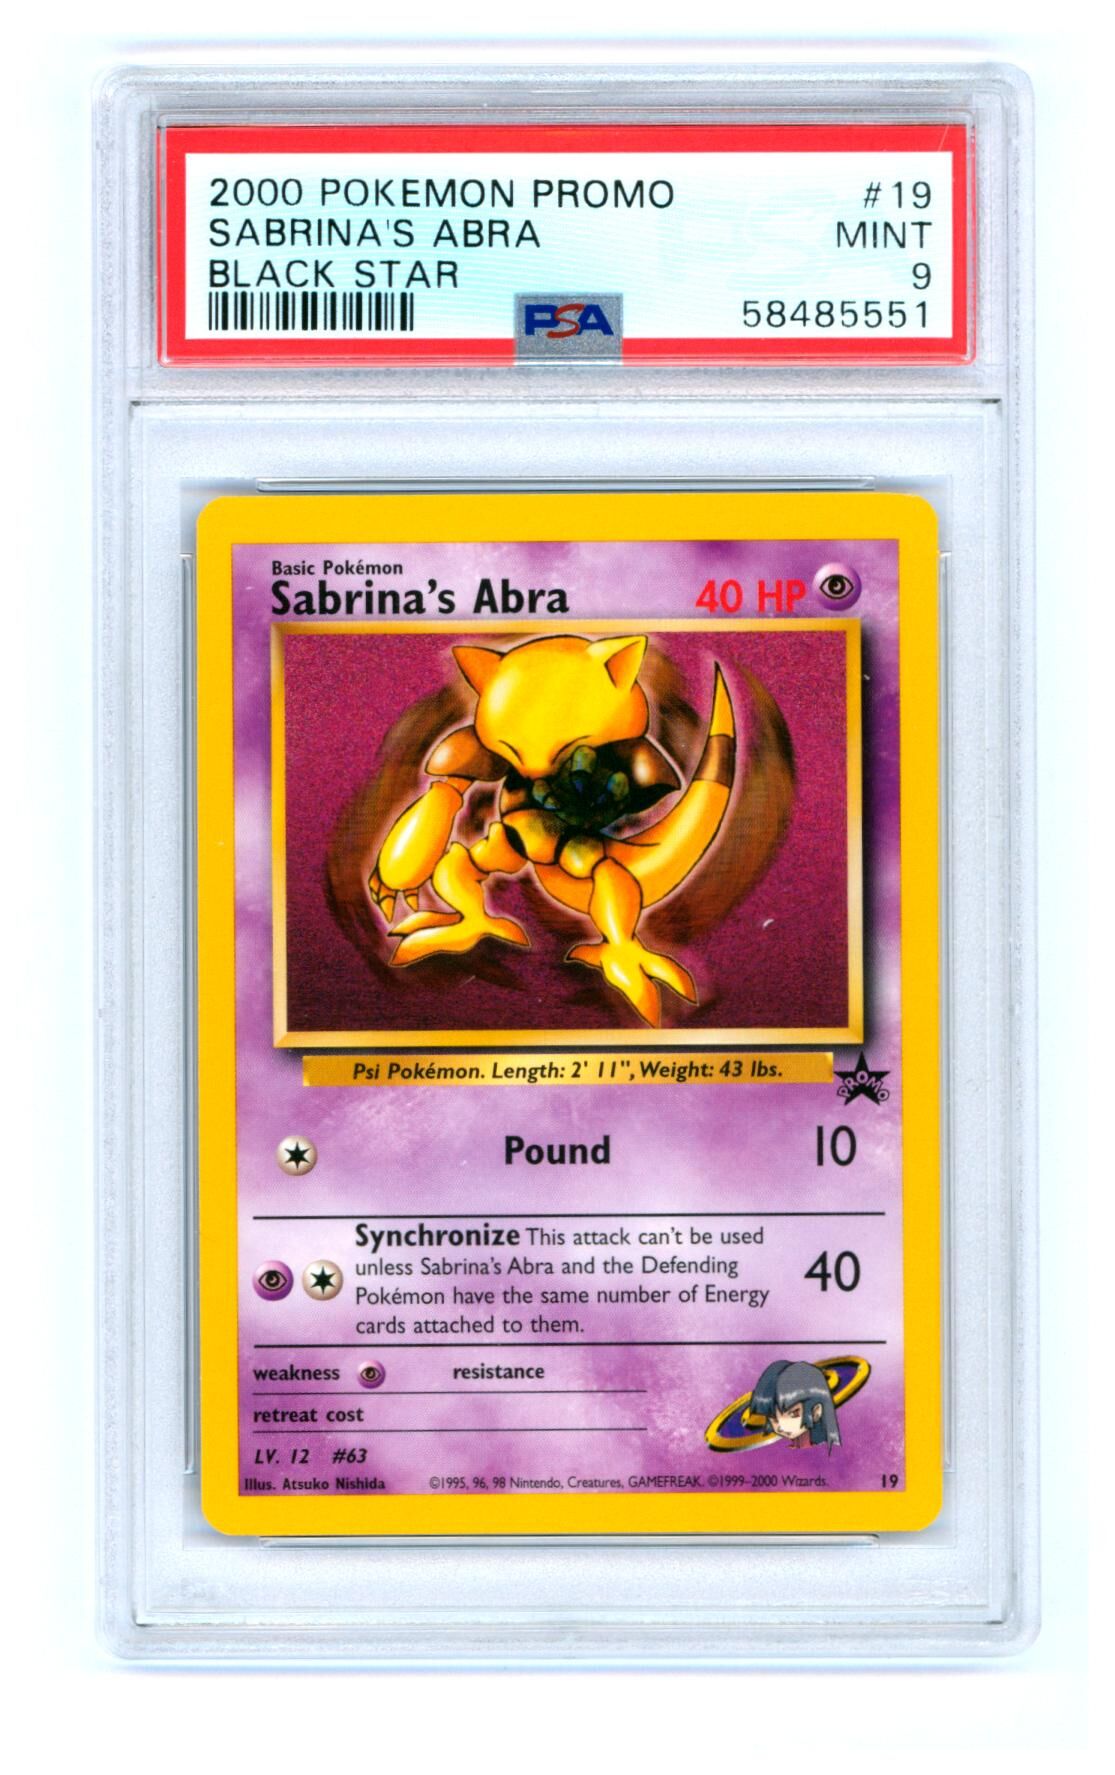 Sabrina's Abra - Black Star Promo 19 - PSA 9 MINT - Pokémon